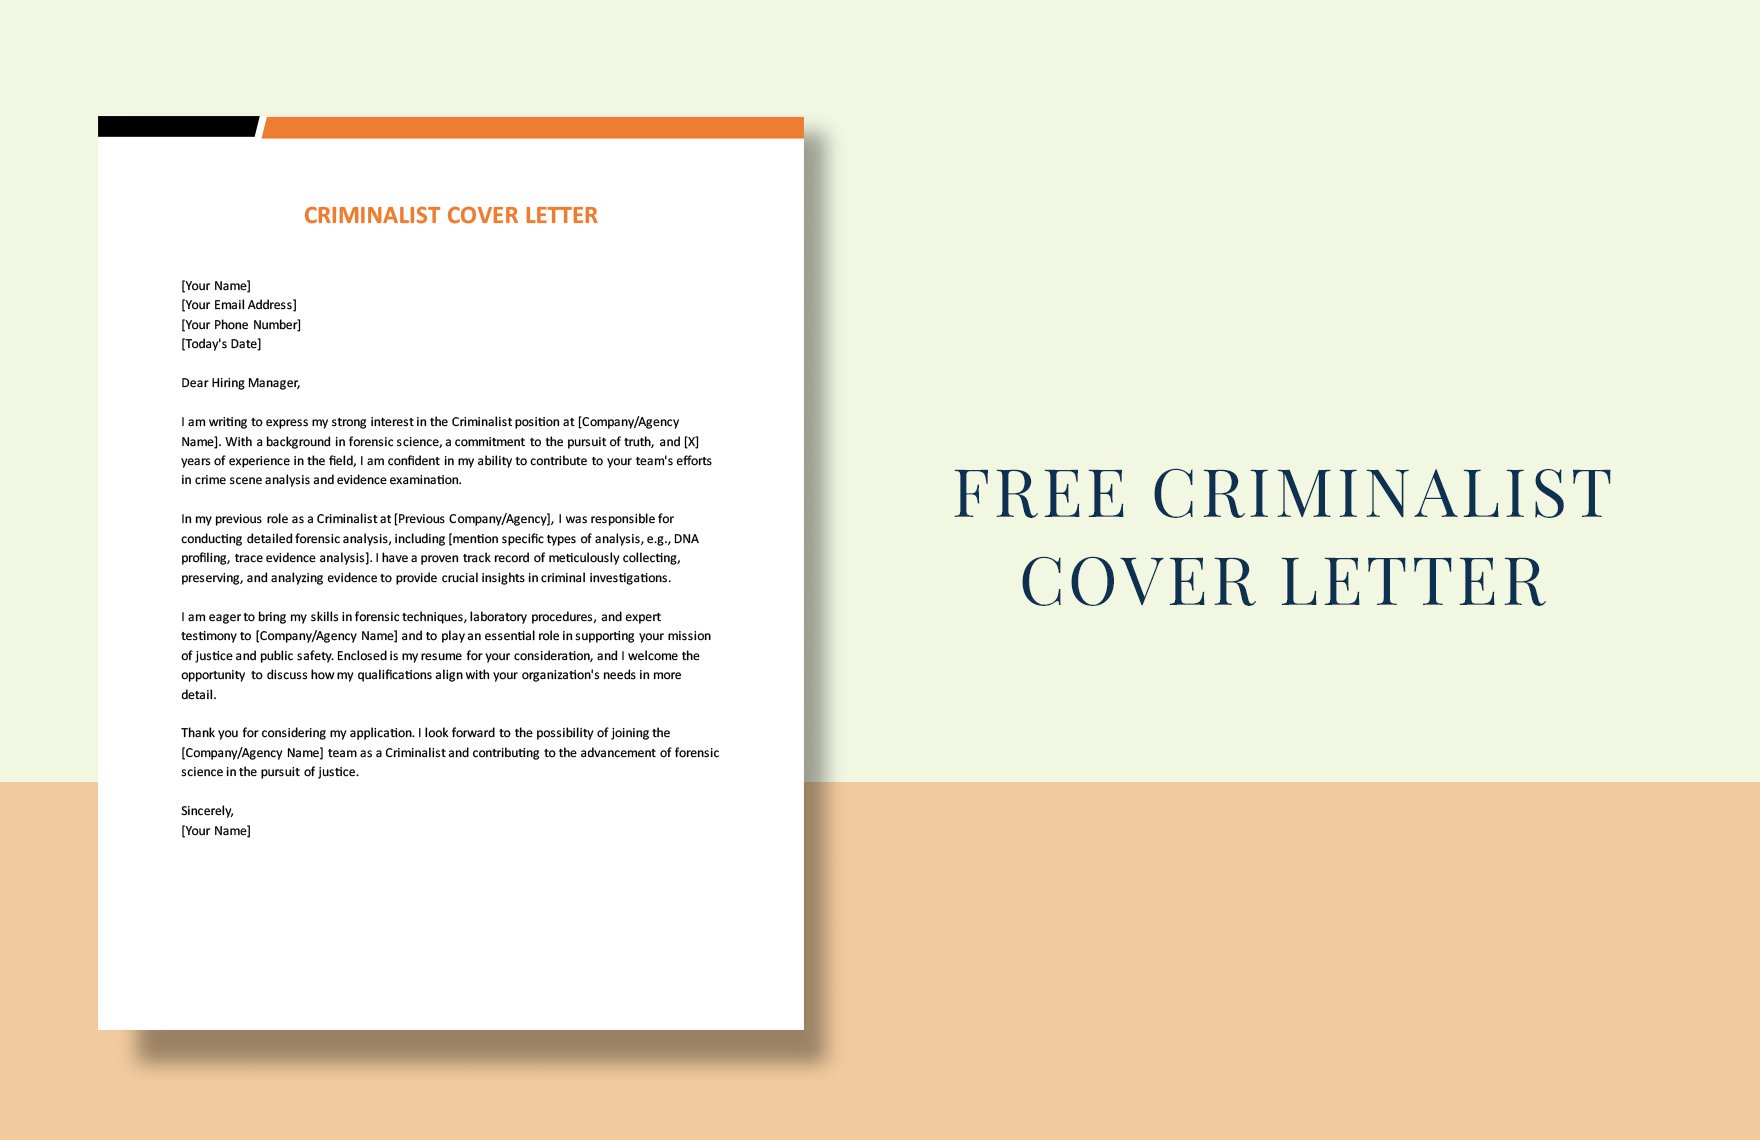 Criminalist Cover Letter in Word, Google Docs, PDF